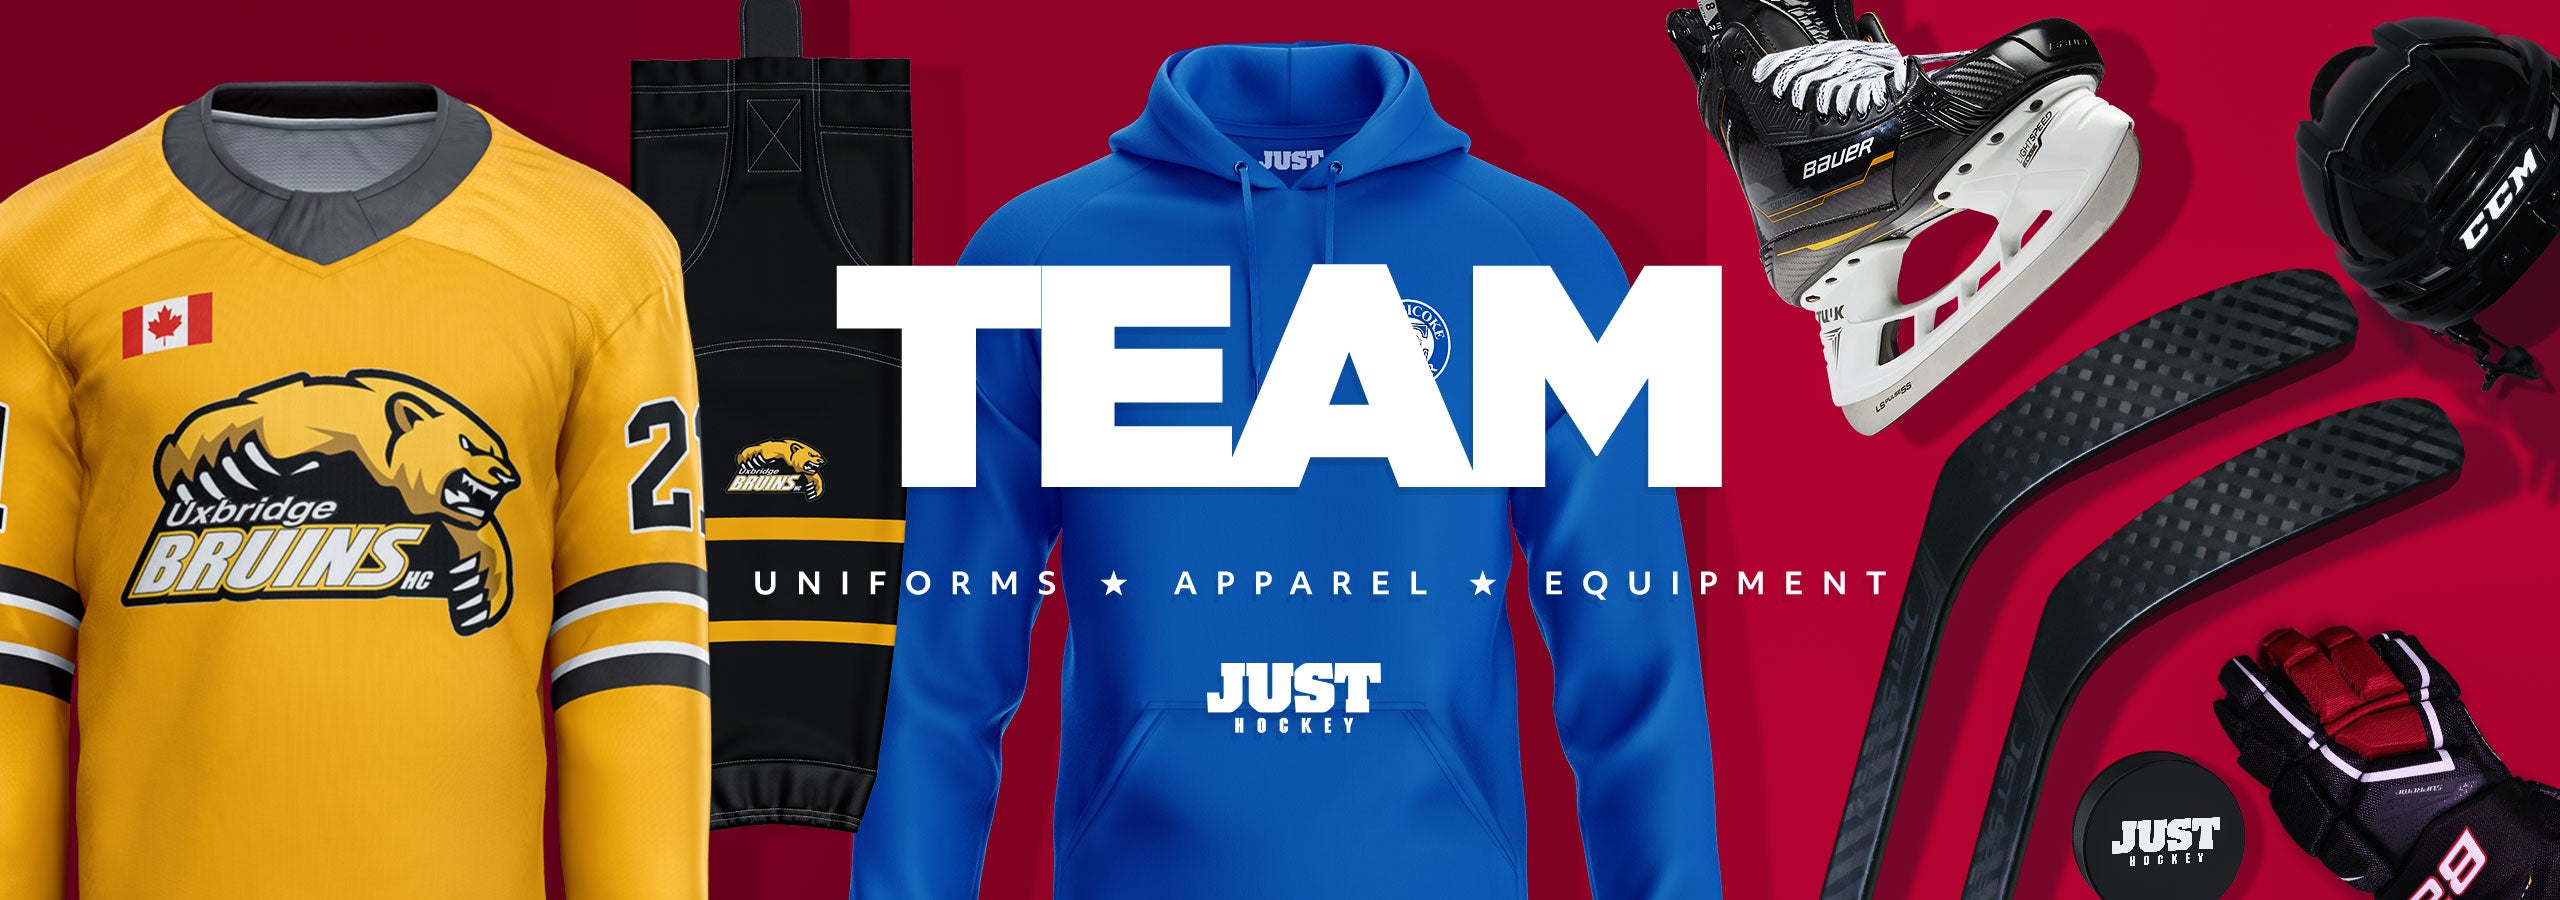 Team Uniforms, Apparel, and Equipment